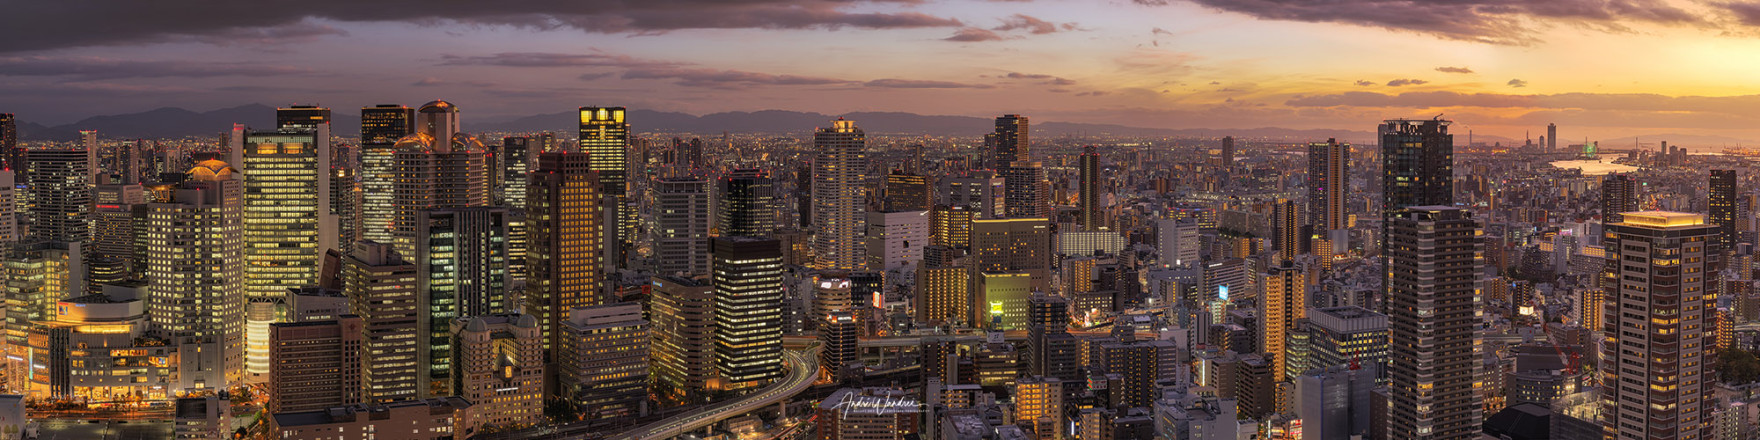 (No. 19-106) Osaka at evening (panorama)